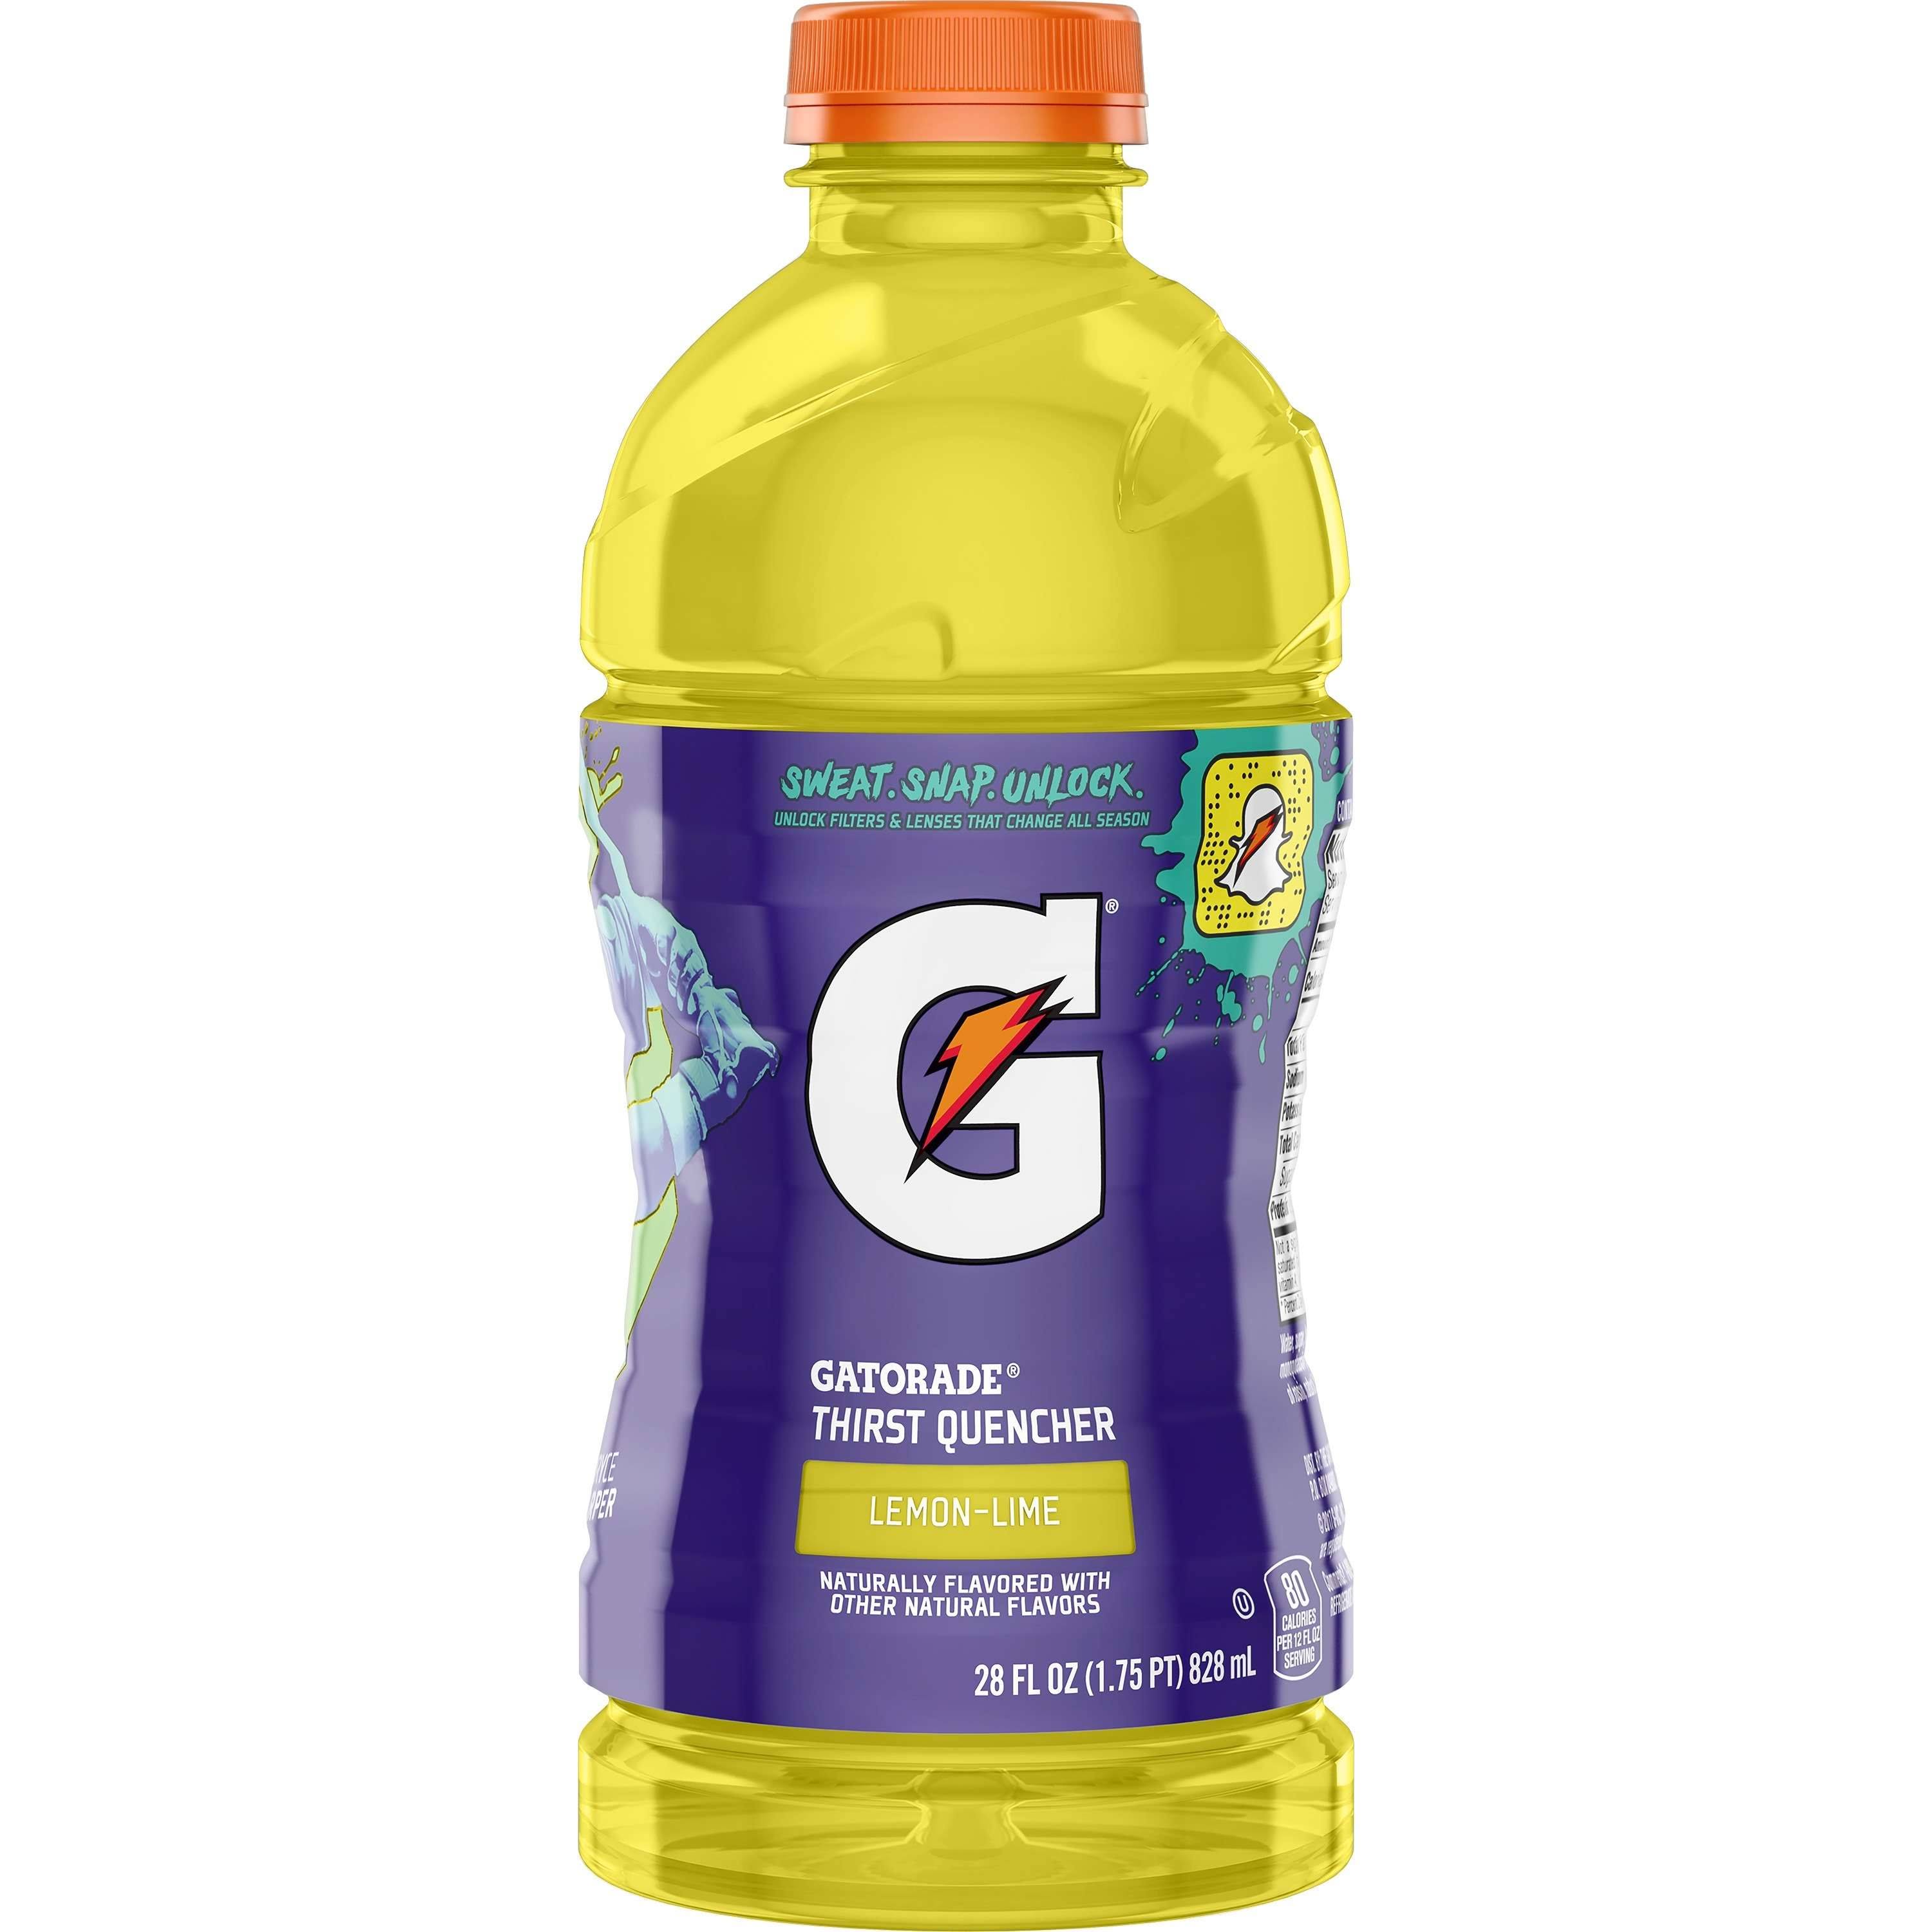 Gatorade Thirst Quencher, Lemon-Lime - 28 fl oz